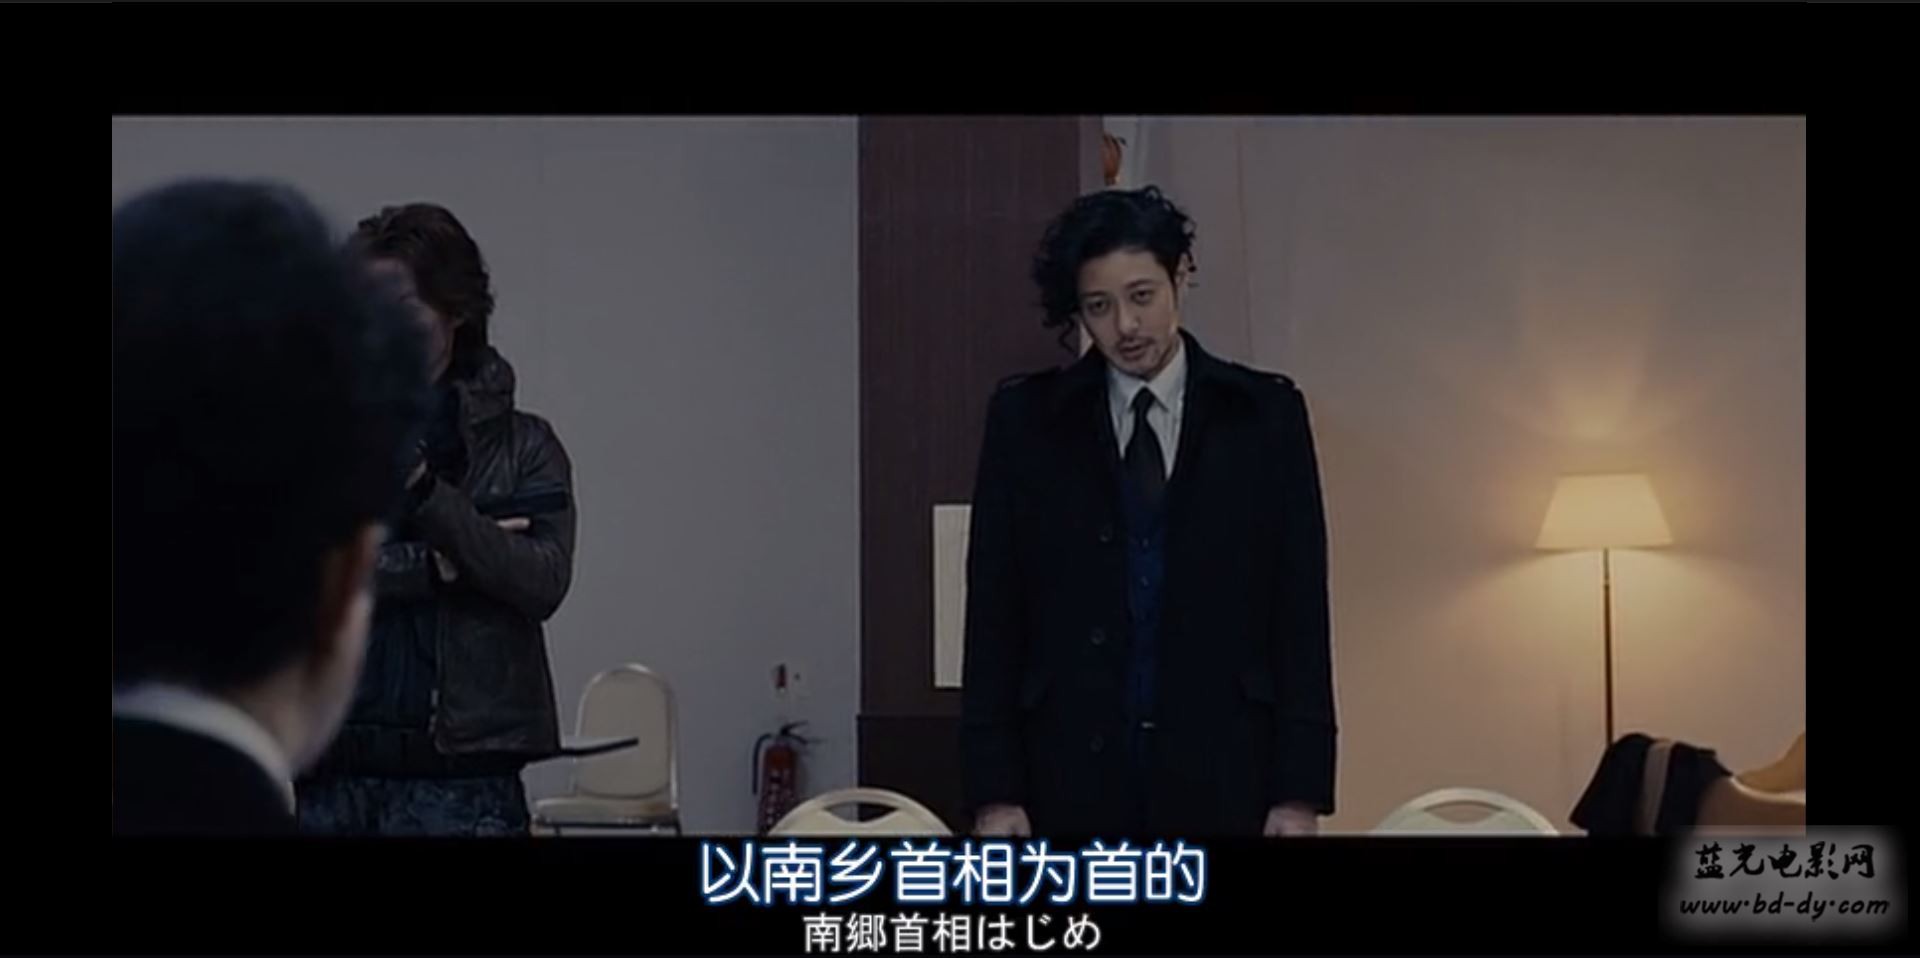 《S-最后的警官 电影版》2015日本动作犯罪.DVD.中日双字截图;jsessionid=senYRnoEiZZcD2dK9hIbOZ7H-qbSgfZ9jIgEawfO